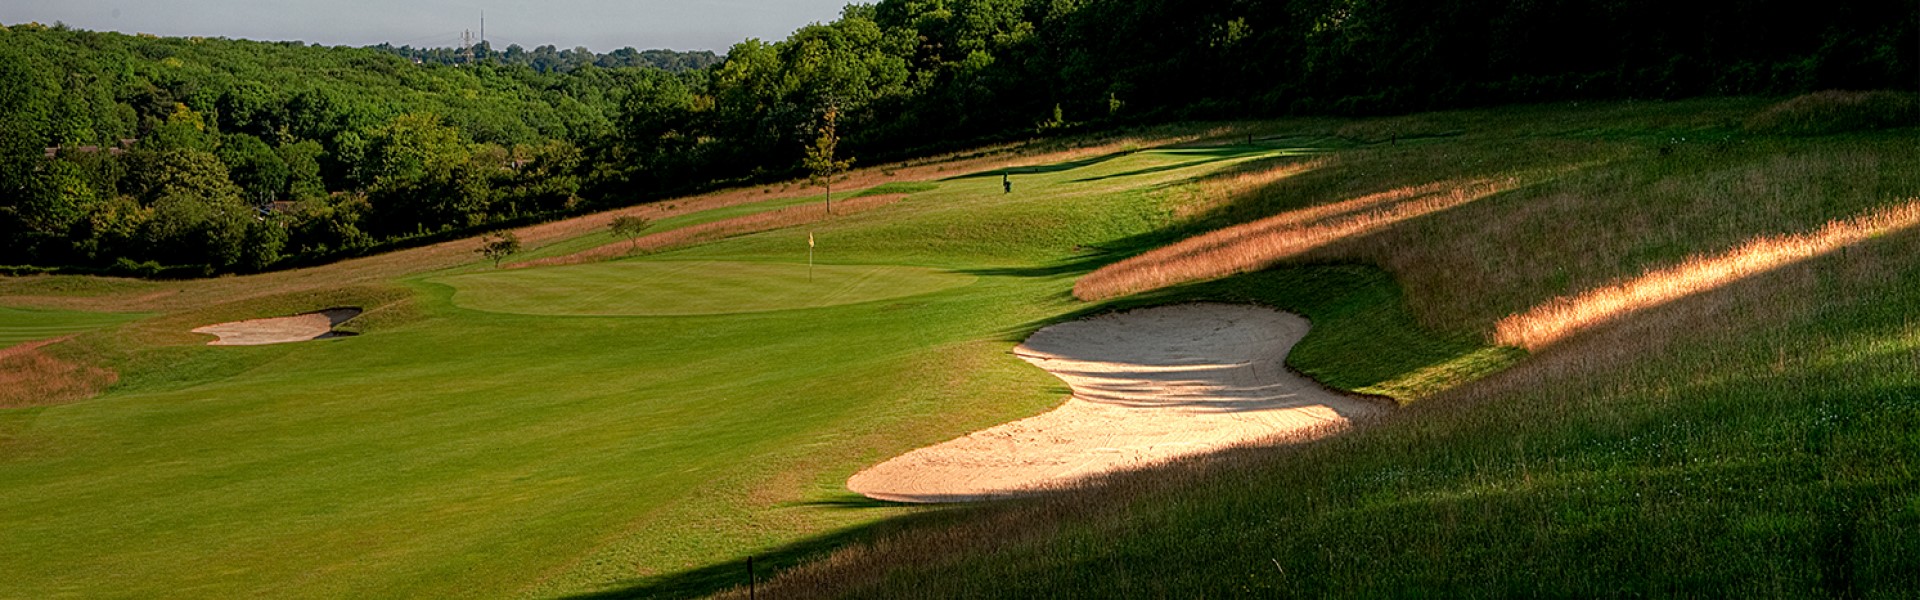 Play quality golf at Farleigh Golf Club in Surrey, England in 2019